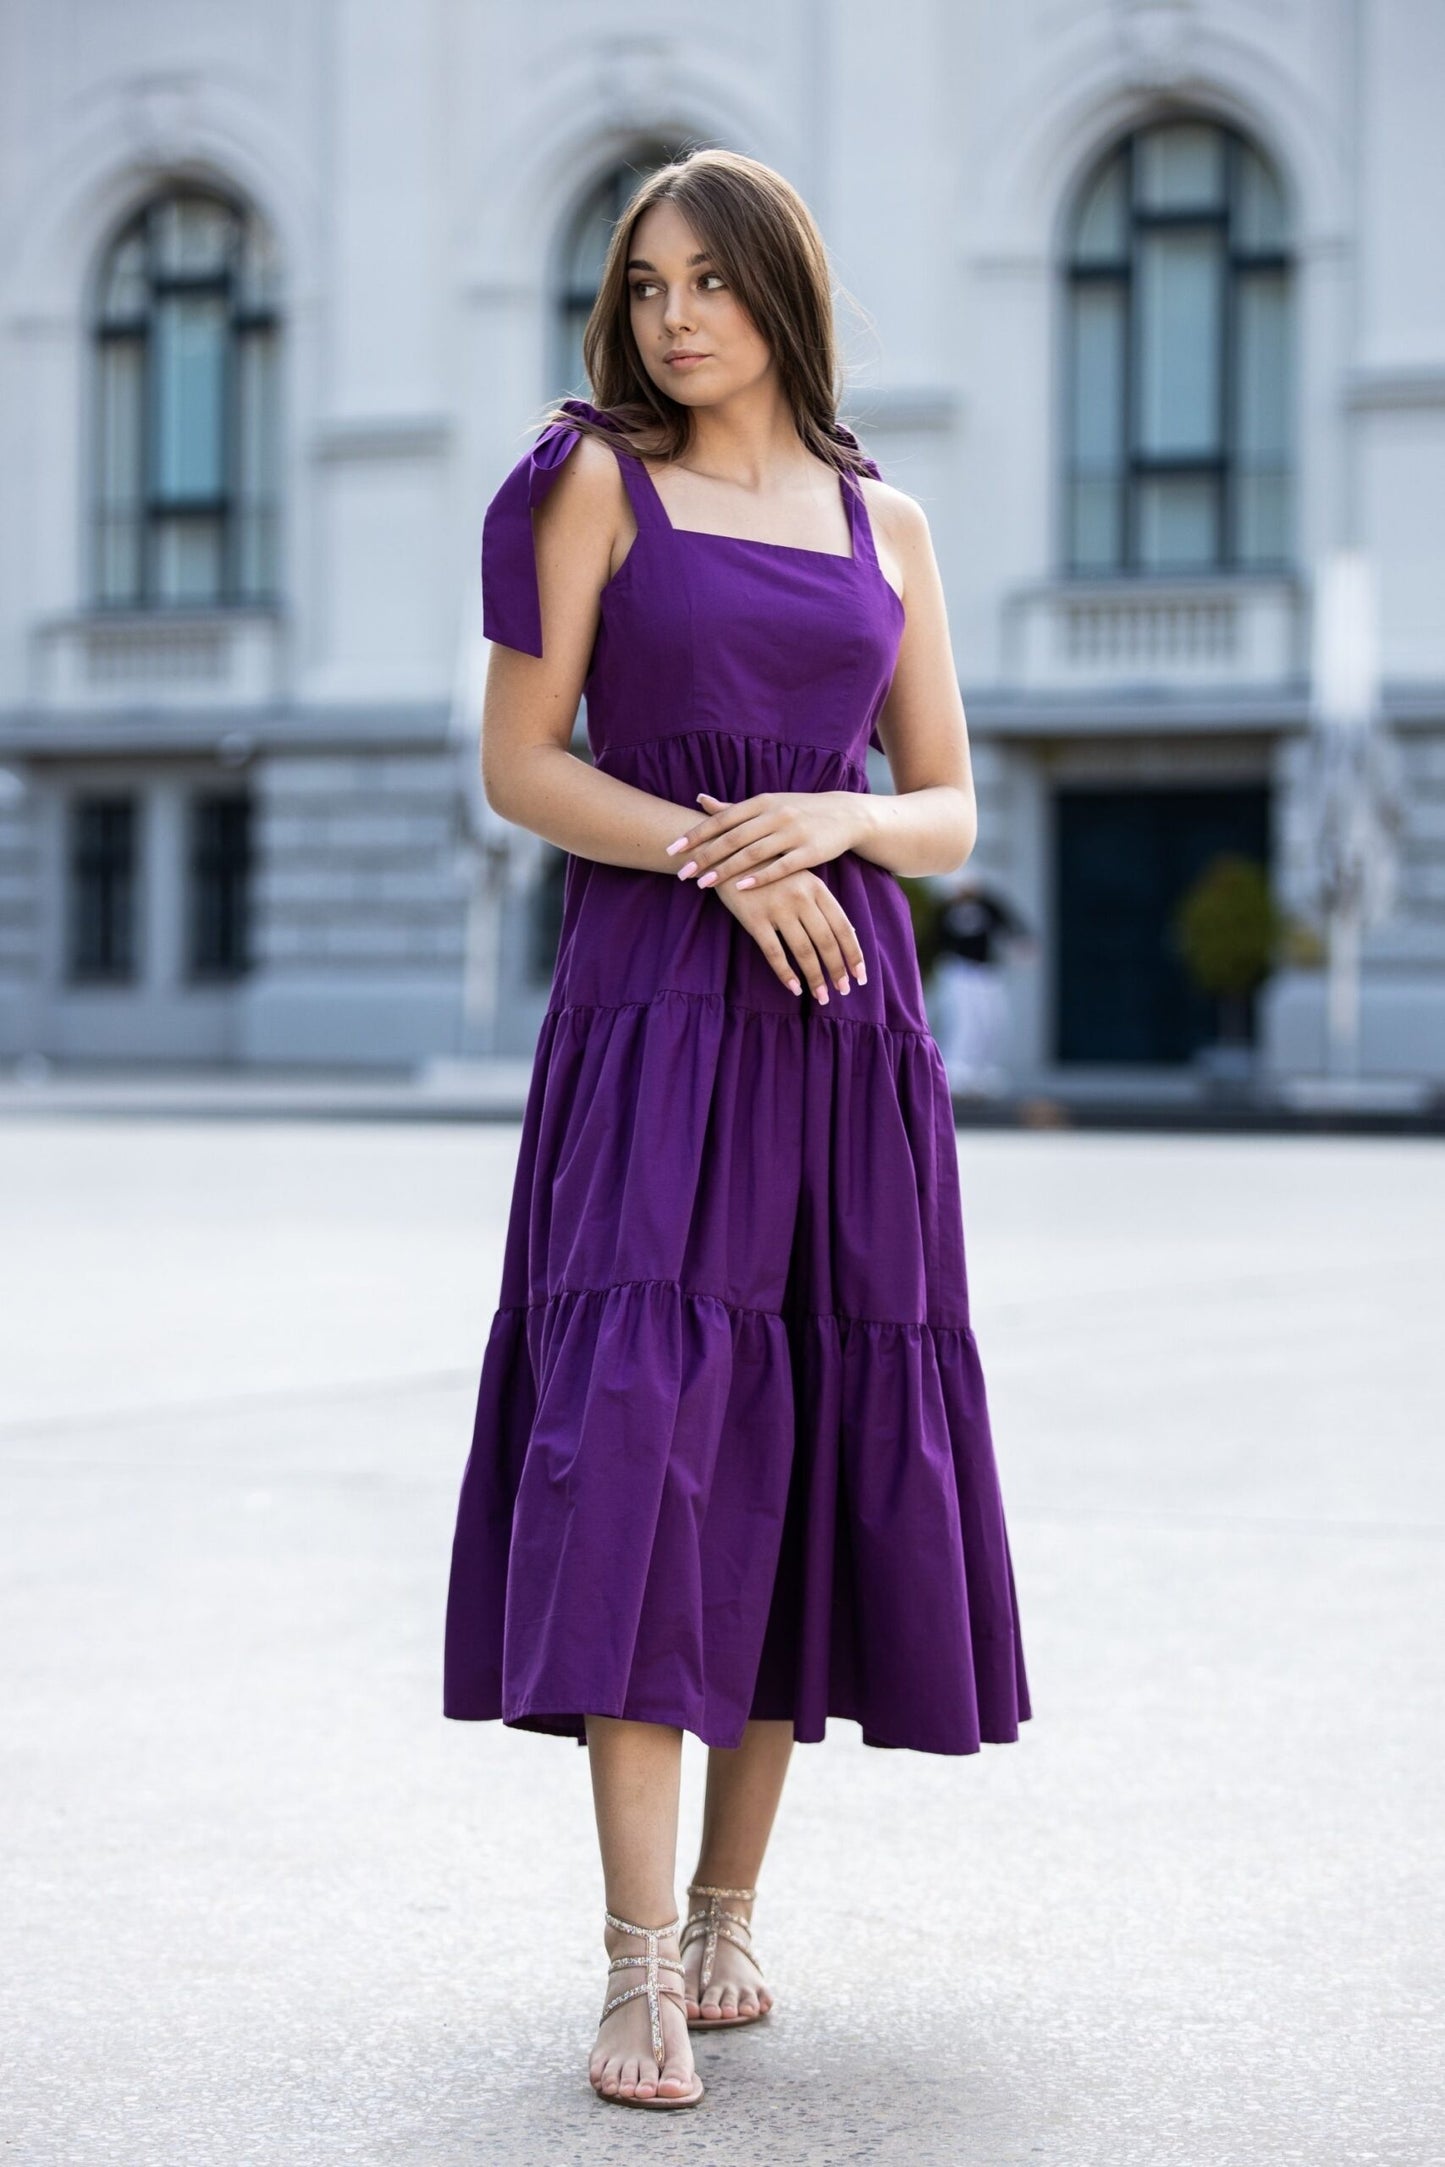 Dark Purple cotton dress with bows